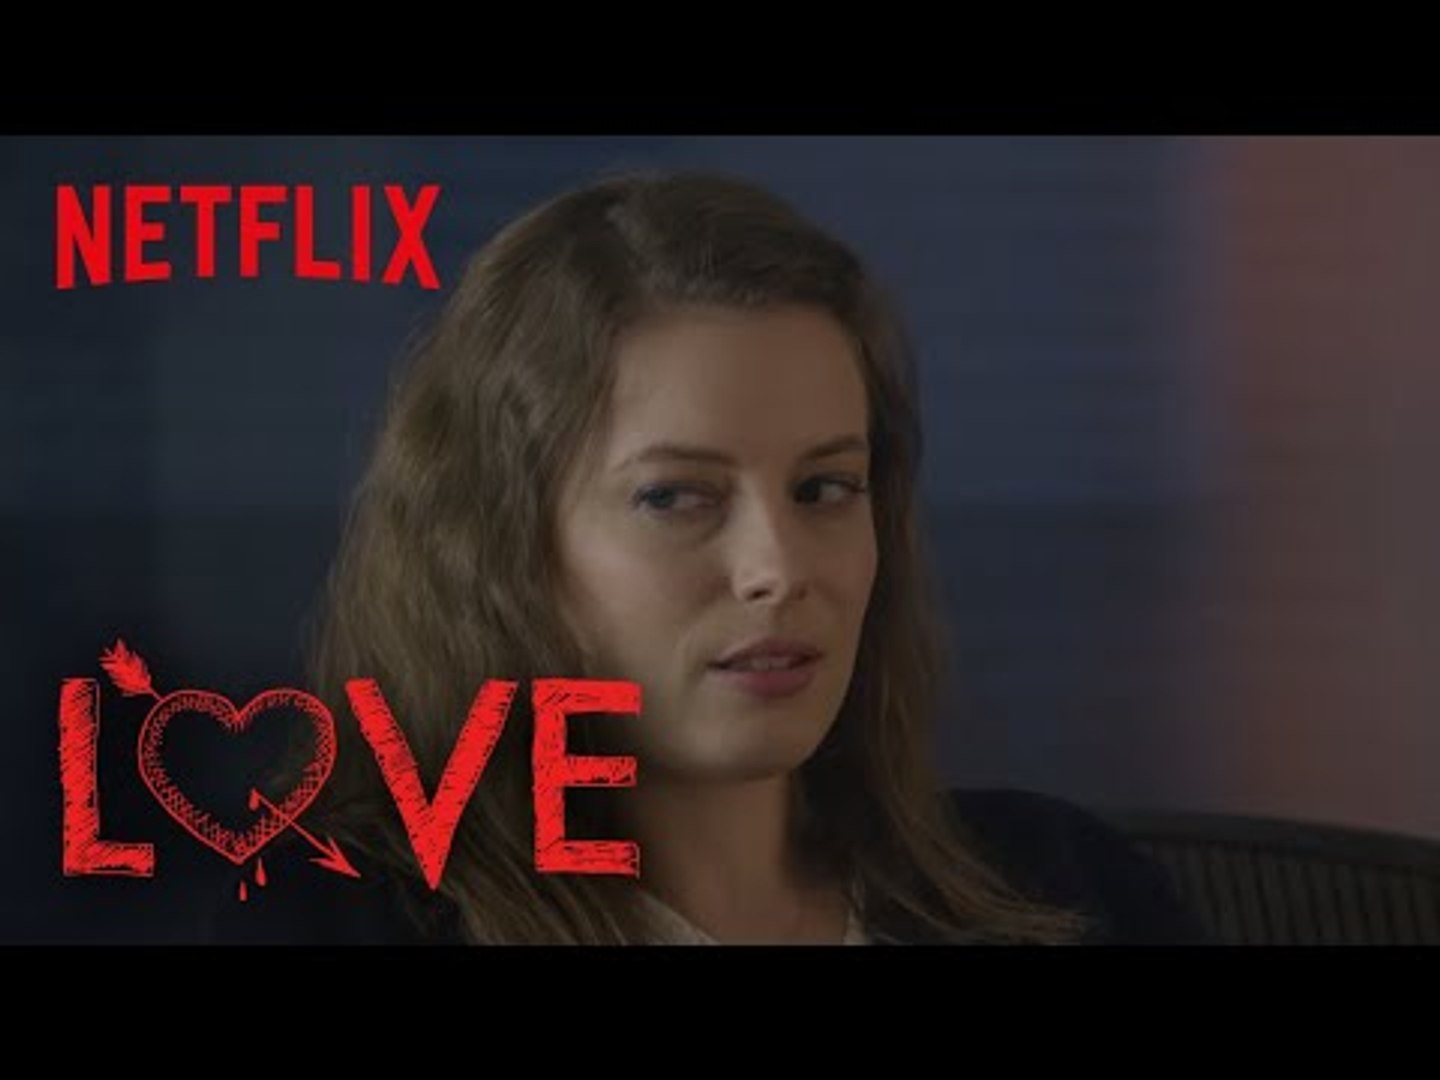 Love netflix sex scene video